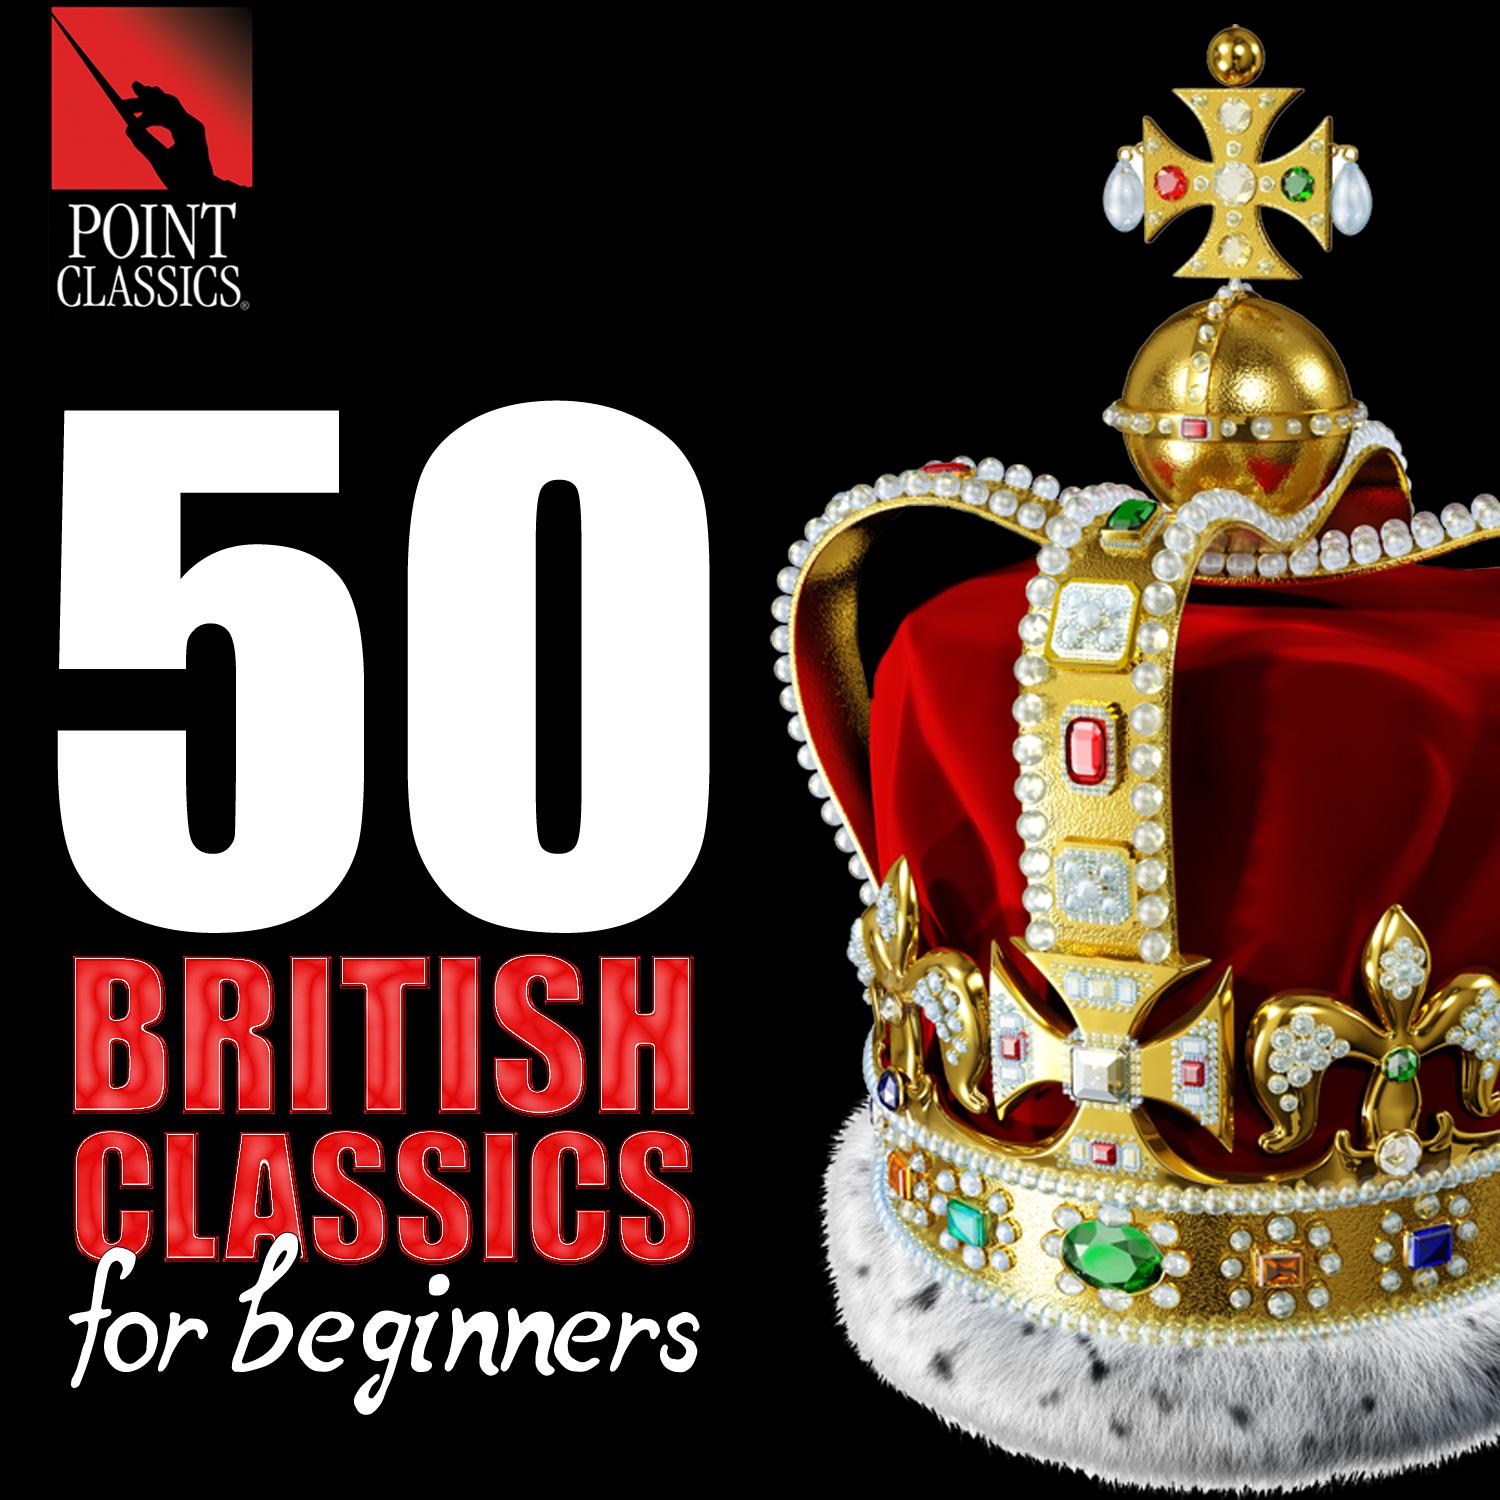 50 British Classics for Beginners